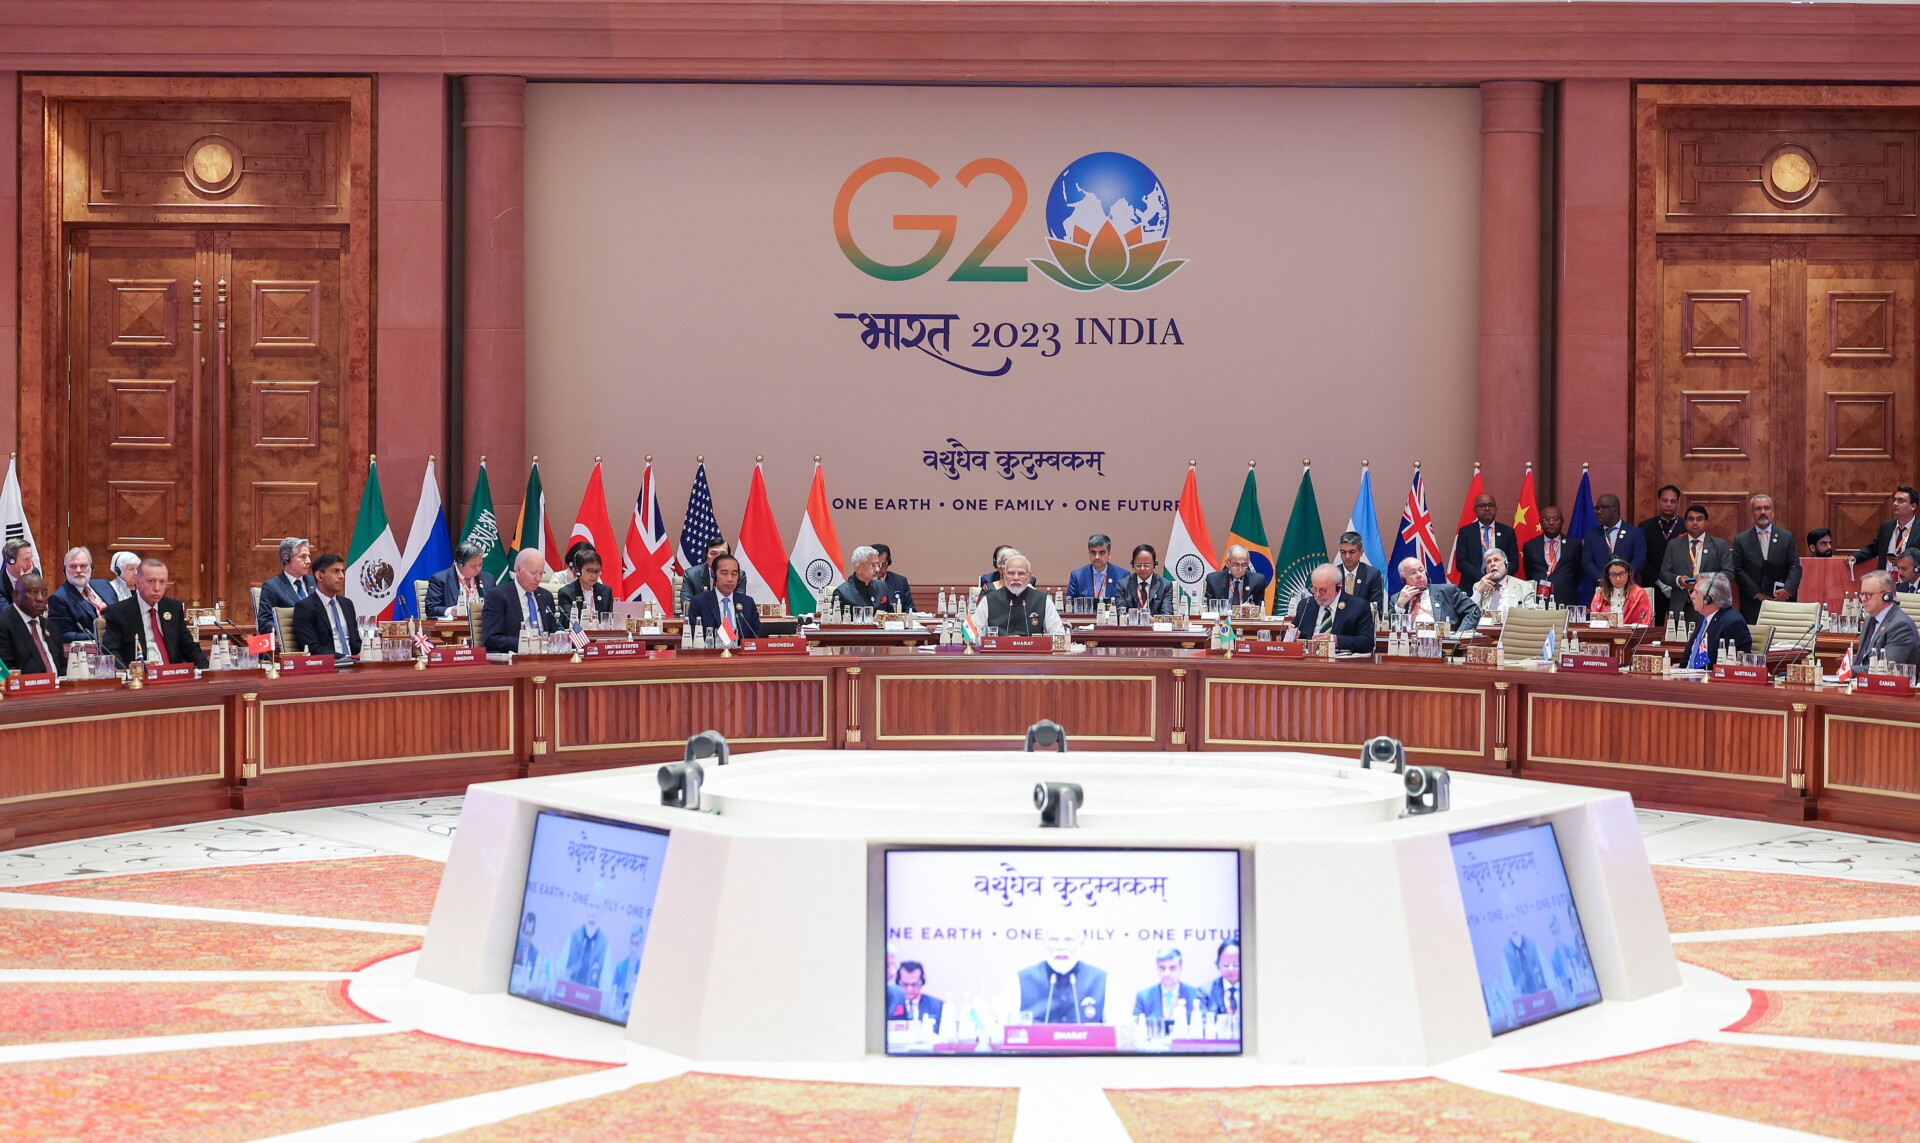 H σύνοδος της G20 στην Ινδία © EPA/INDIAN PRESS INFORMATION BUREAU / HANDOUT HANDOUT EDITORIAL USE ONLY/NO SALES